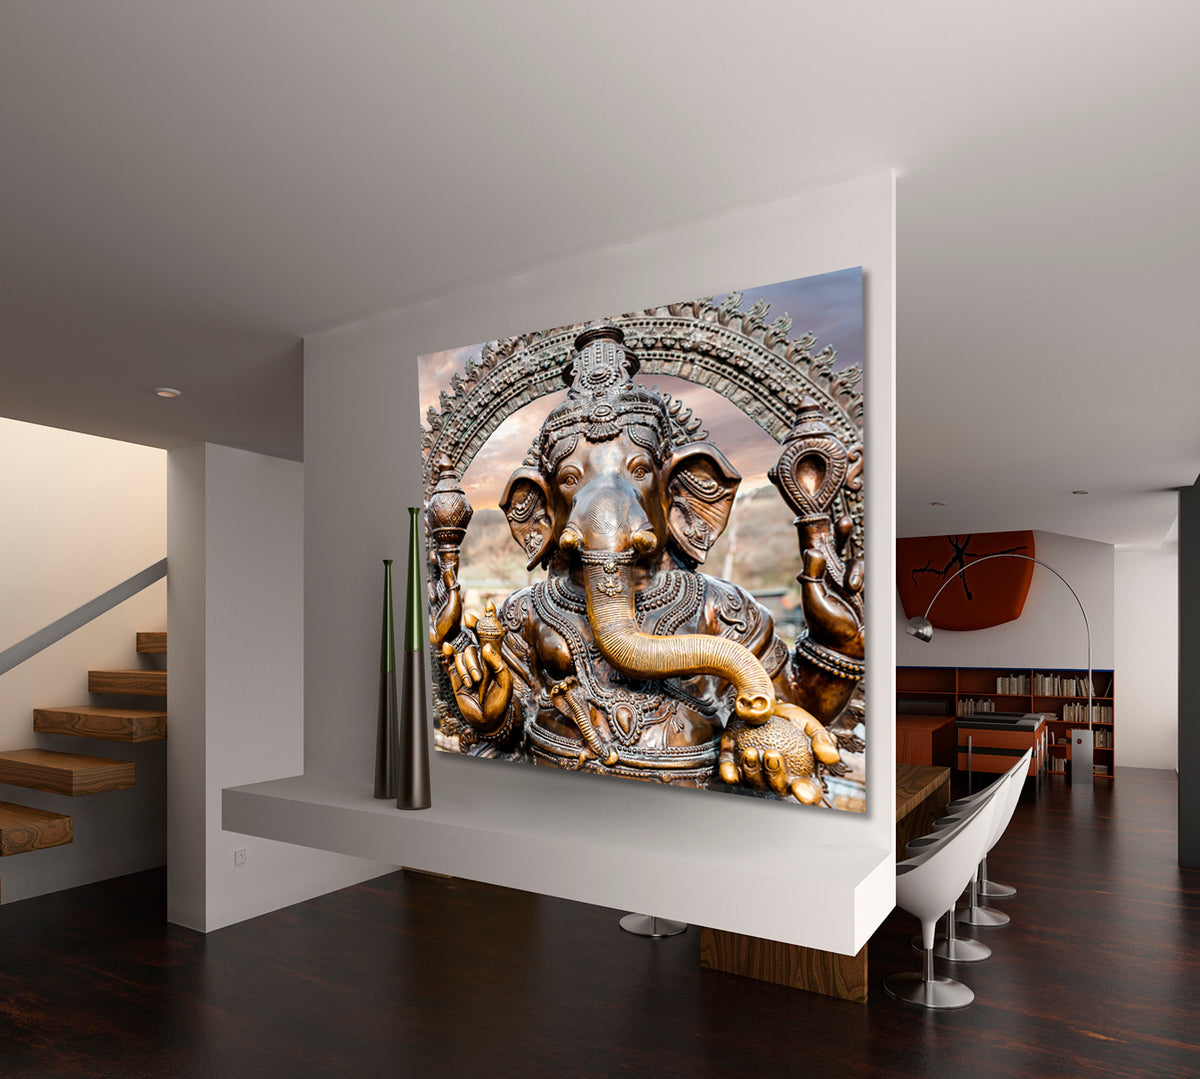 Statue of Hindu Elephant God Ganesha Dramatic Sky - Square Panel Religious Modern Art Artesty 1 Panel 12"x12" 